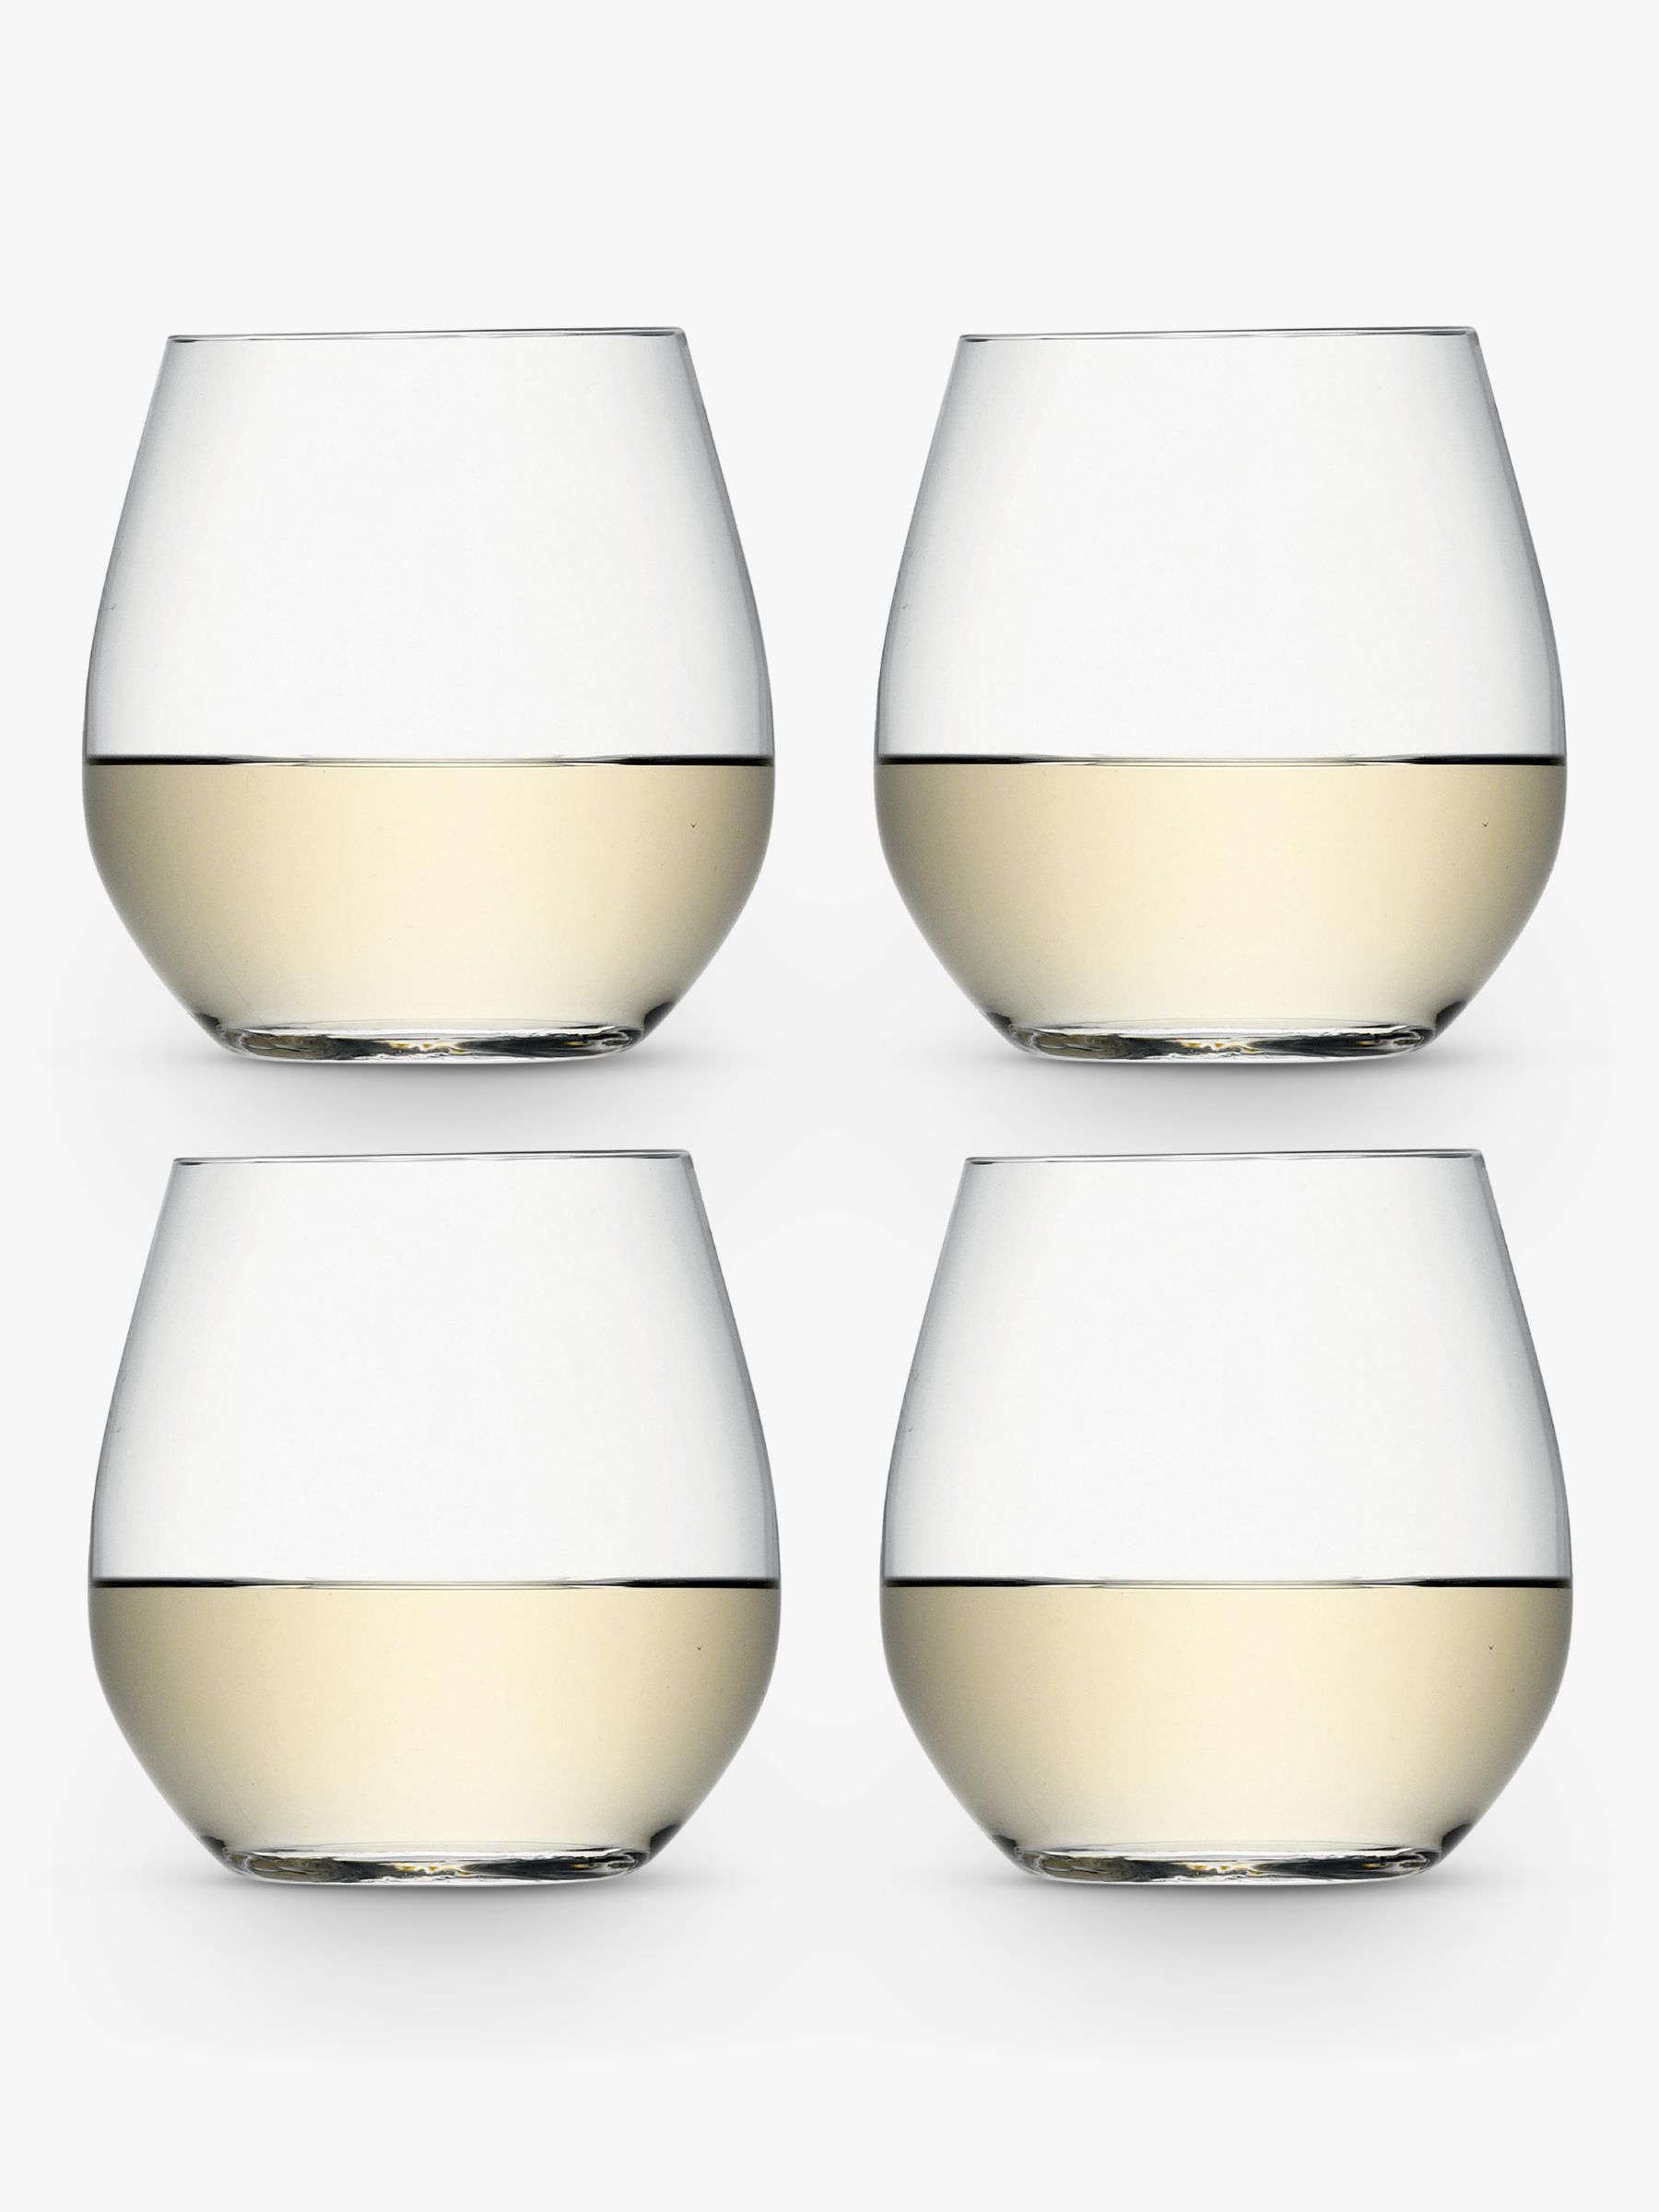 Lsa International Wine Collection Stemless White Wine Glasses 370ml Set Of 4 At John Lewis